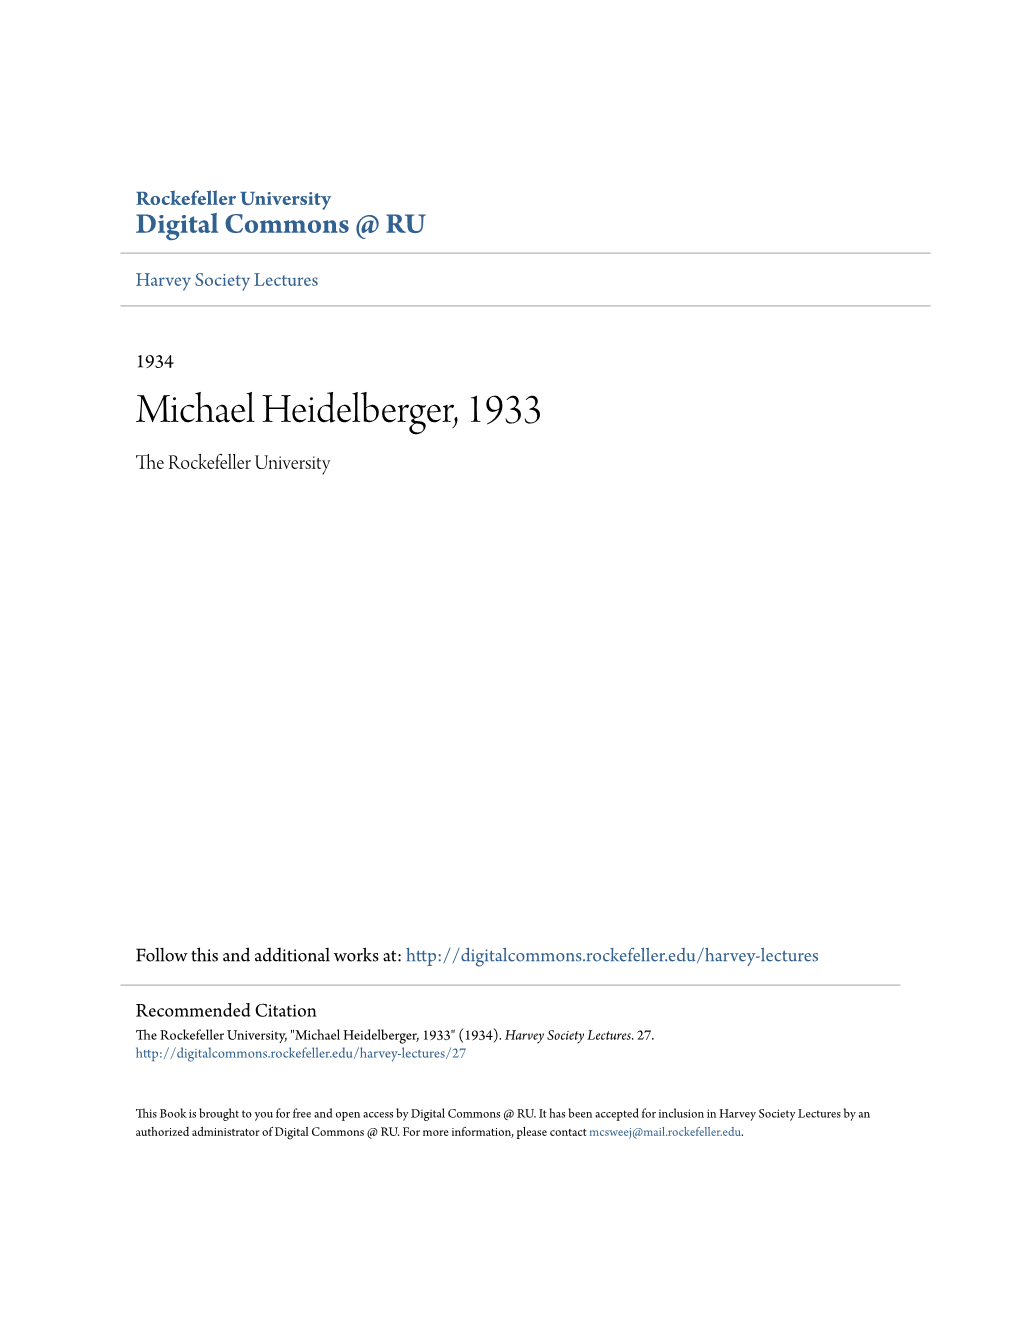 Michael Heidelberger, 1933 the Rockefeller University